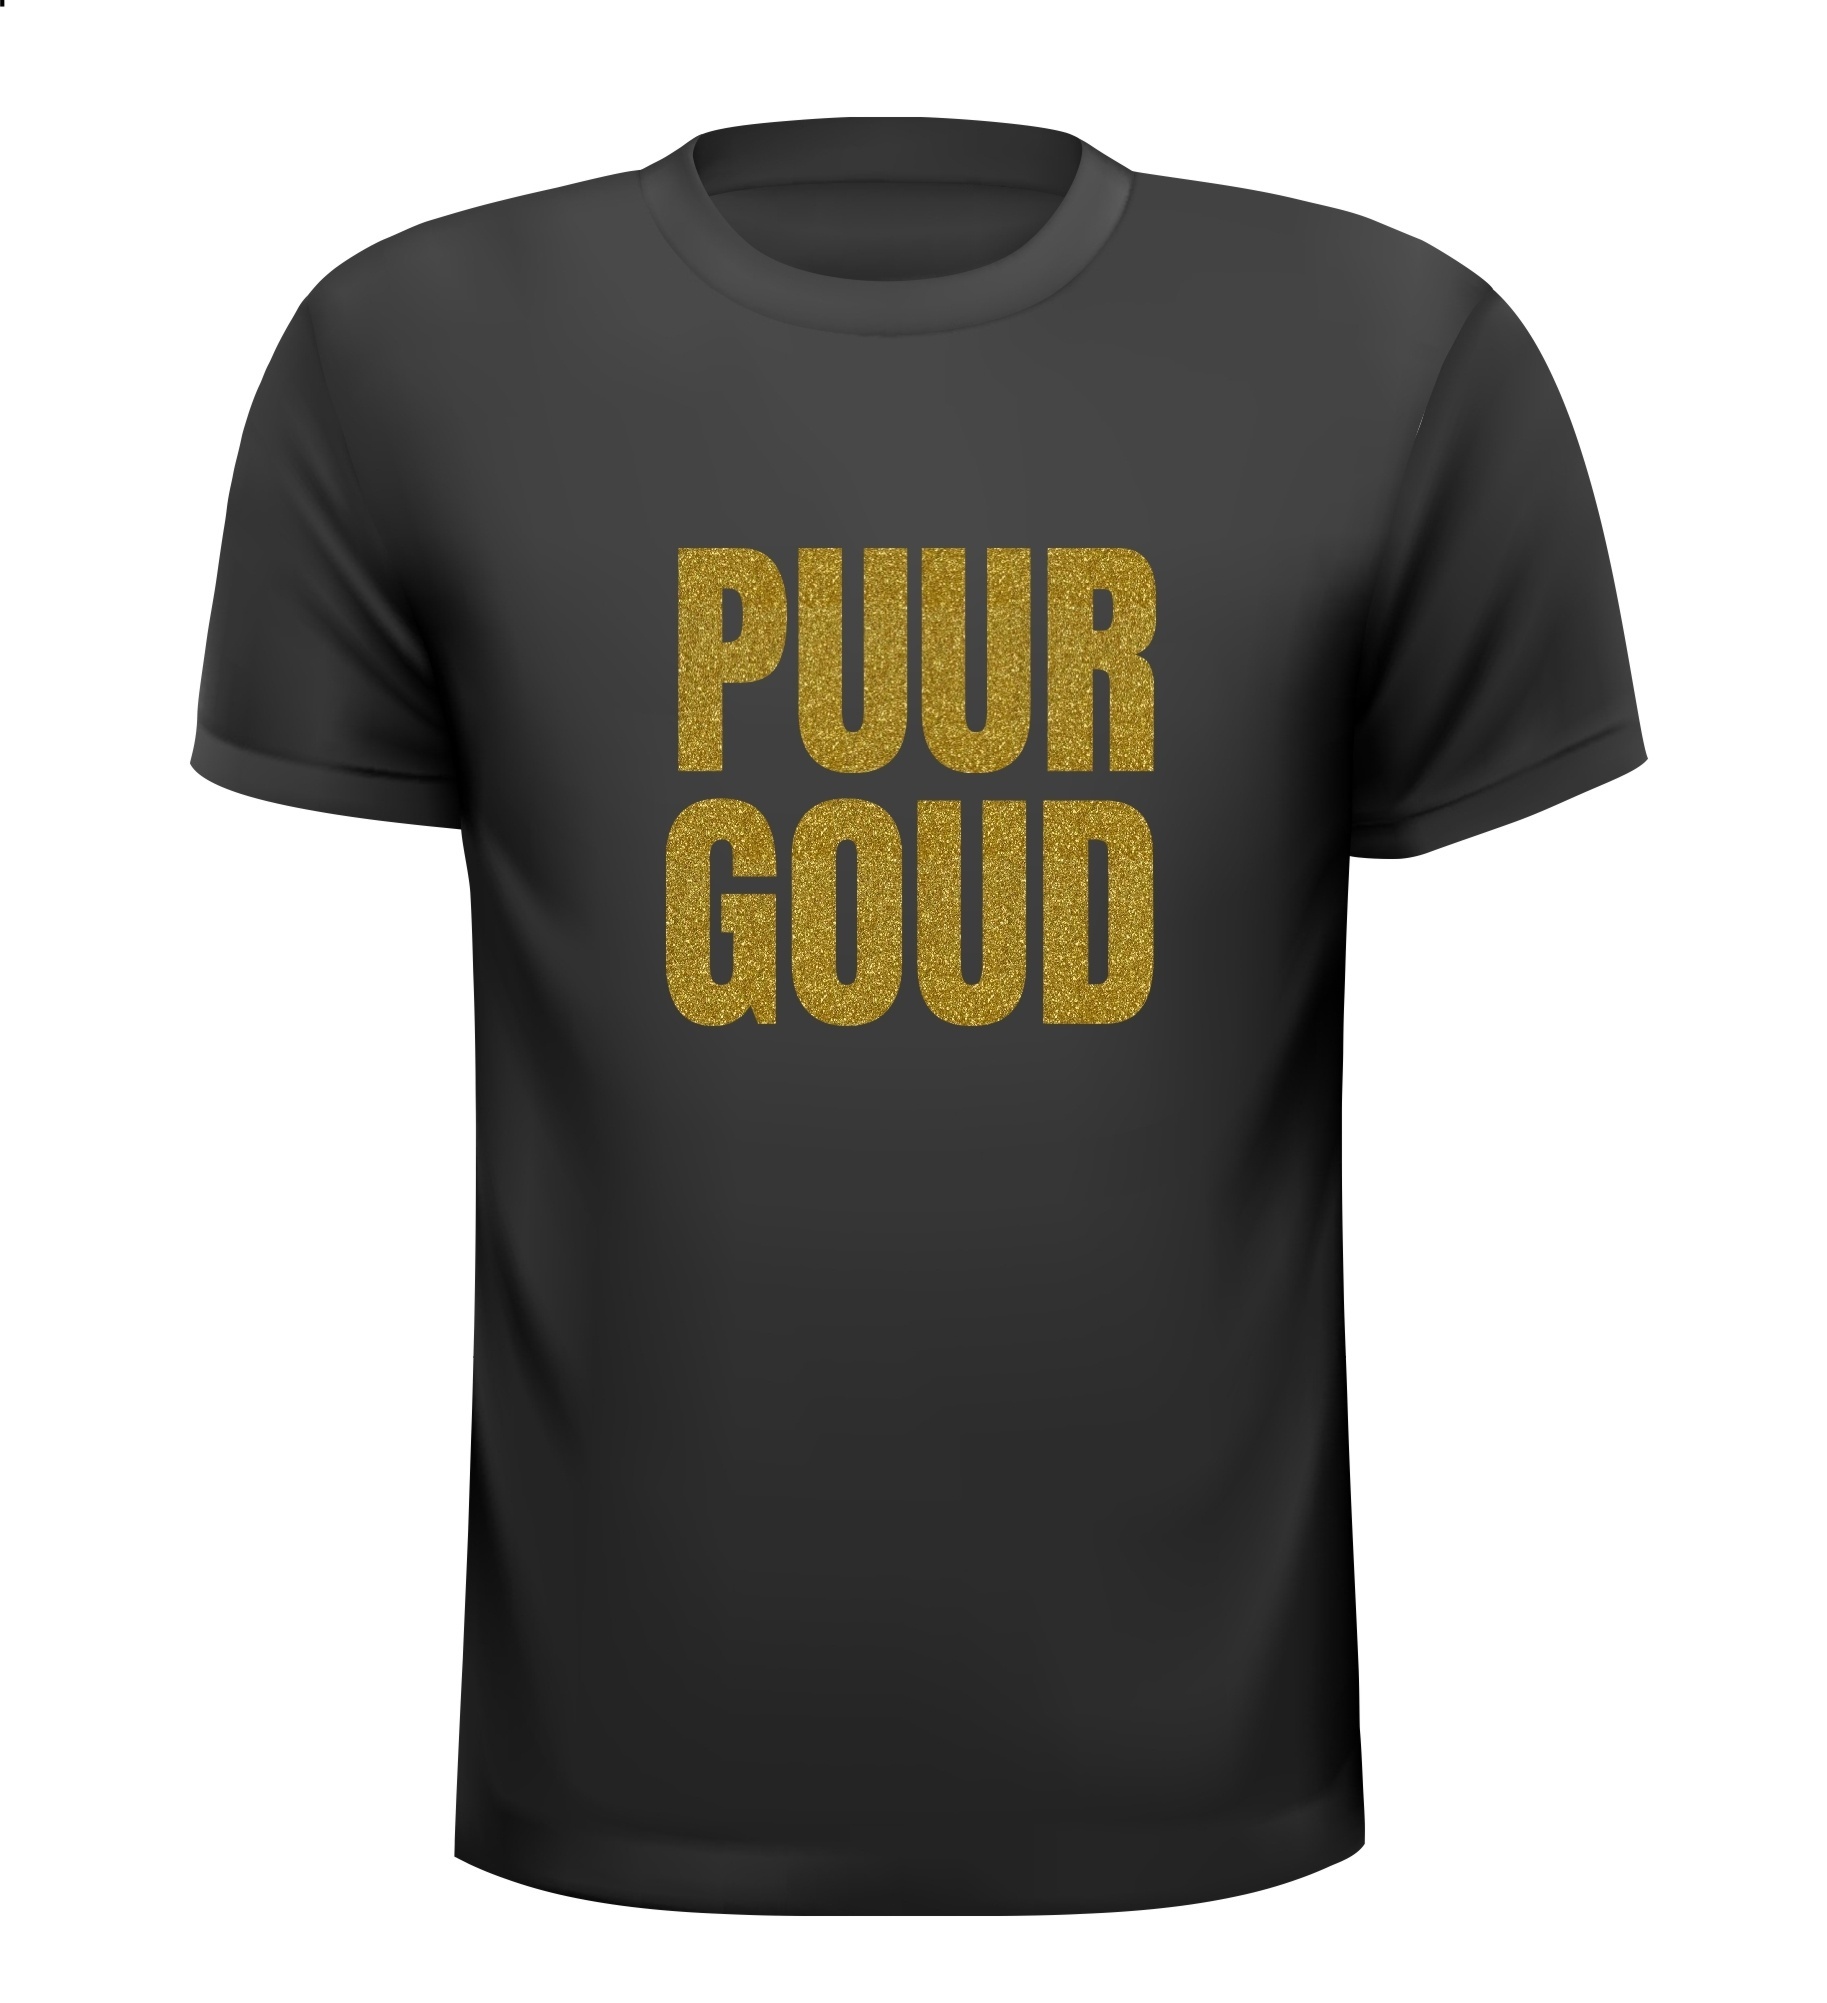 T-shirt tekst puur goud in glitter letters